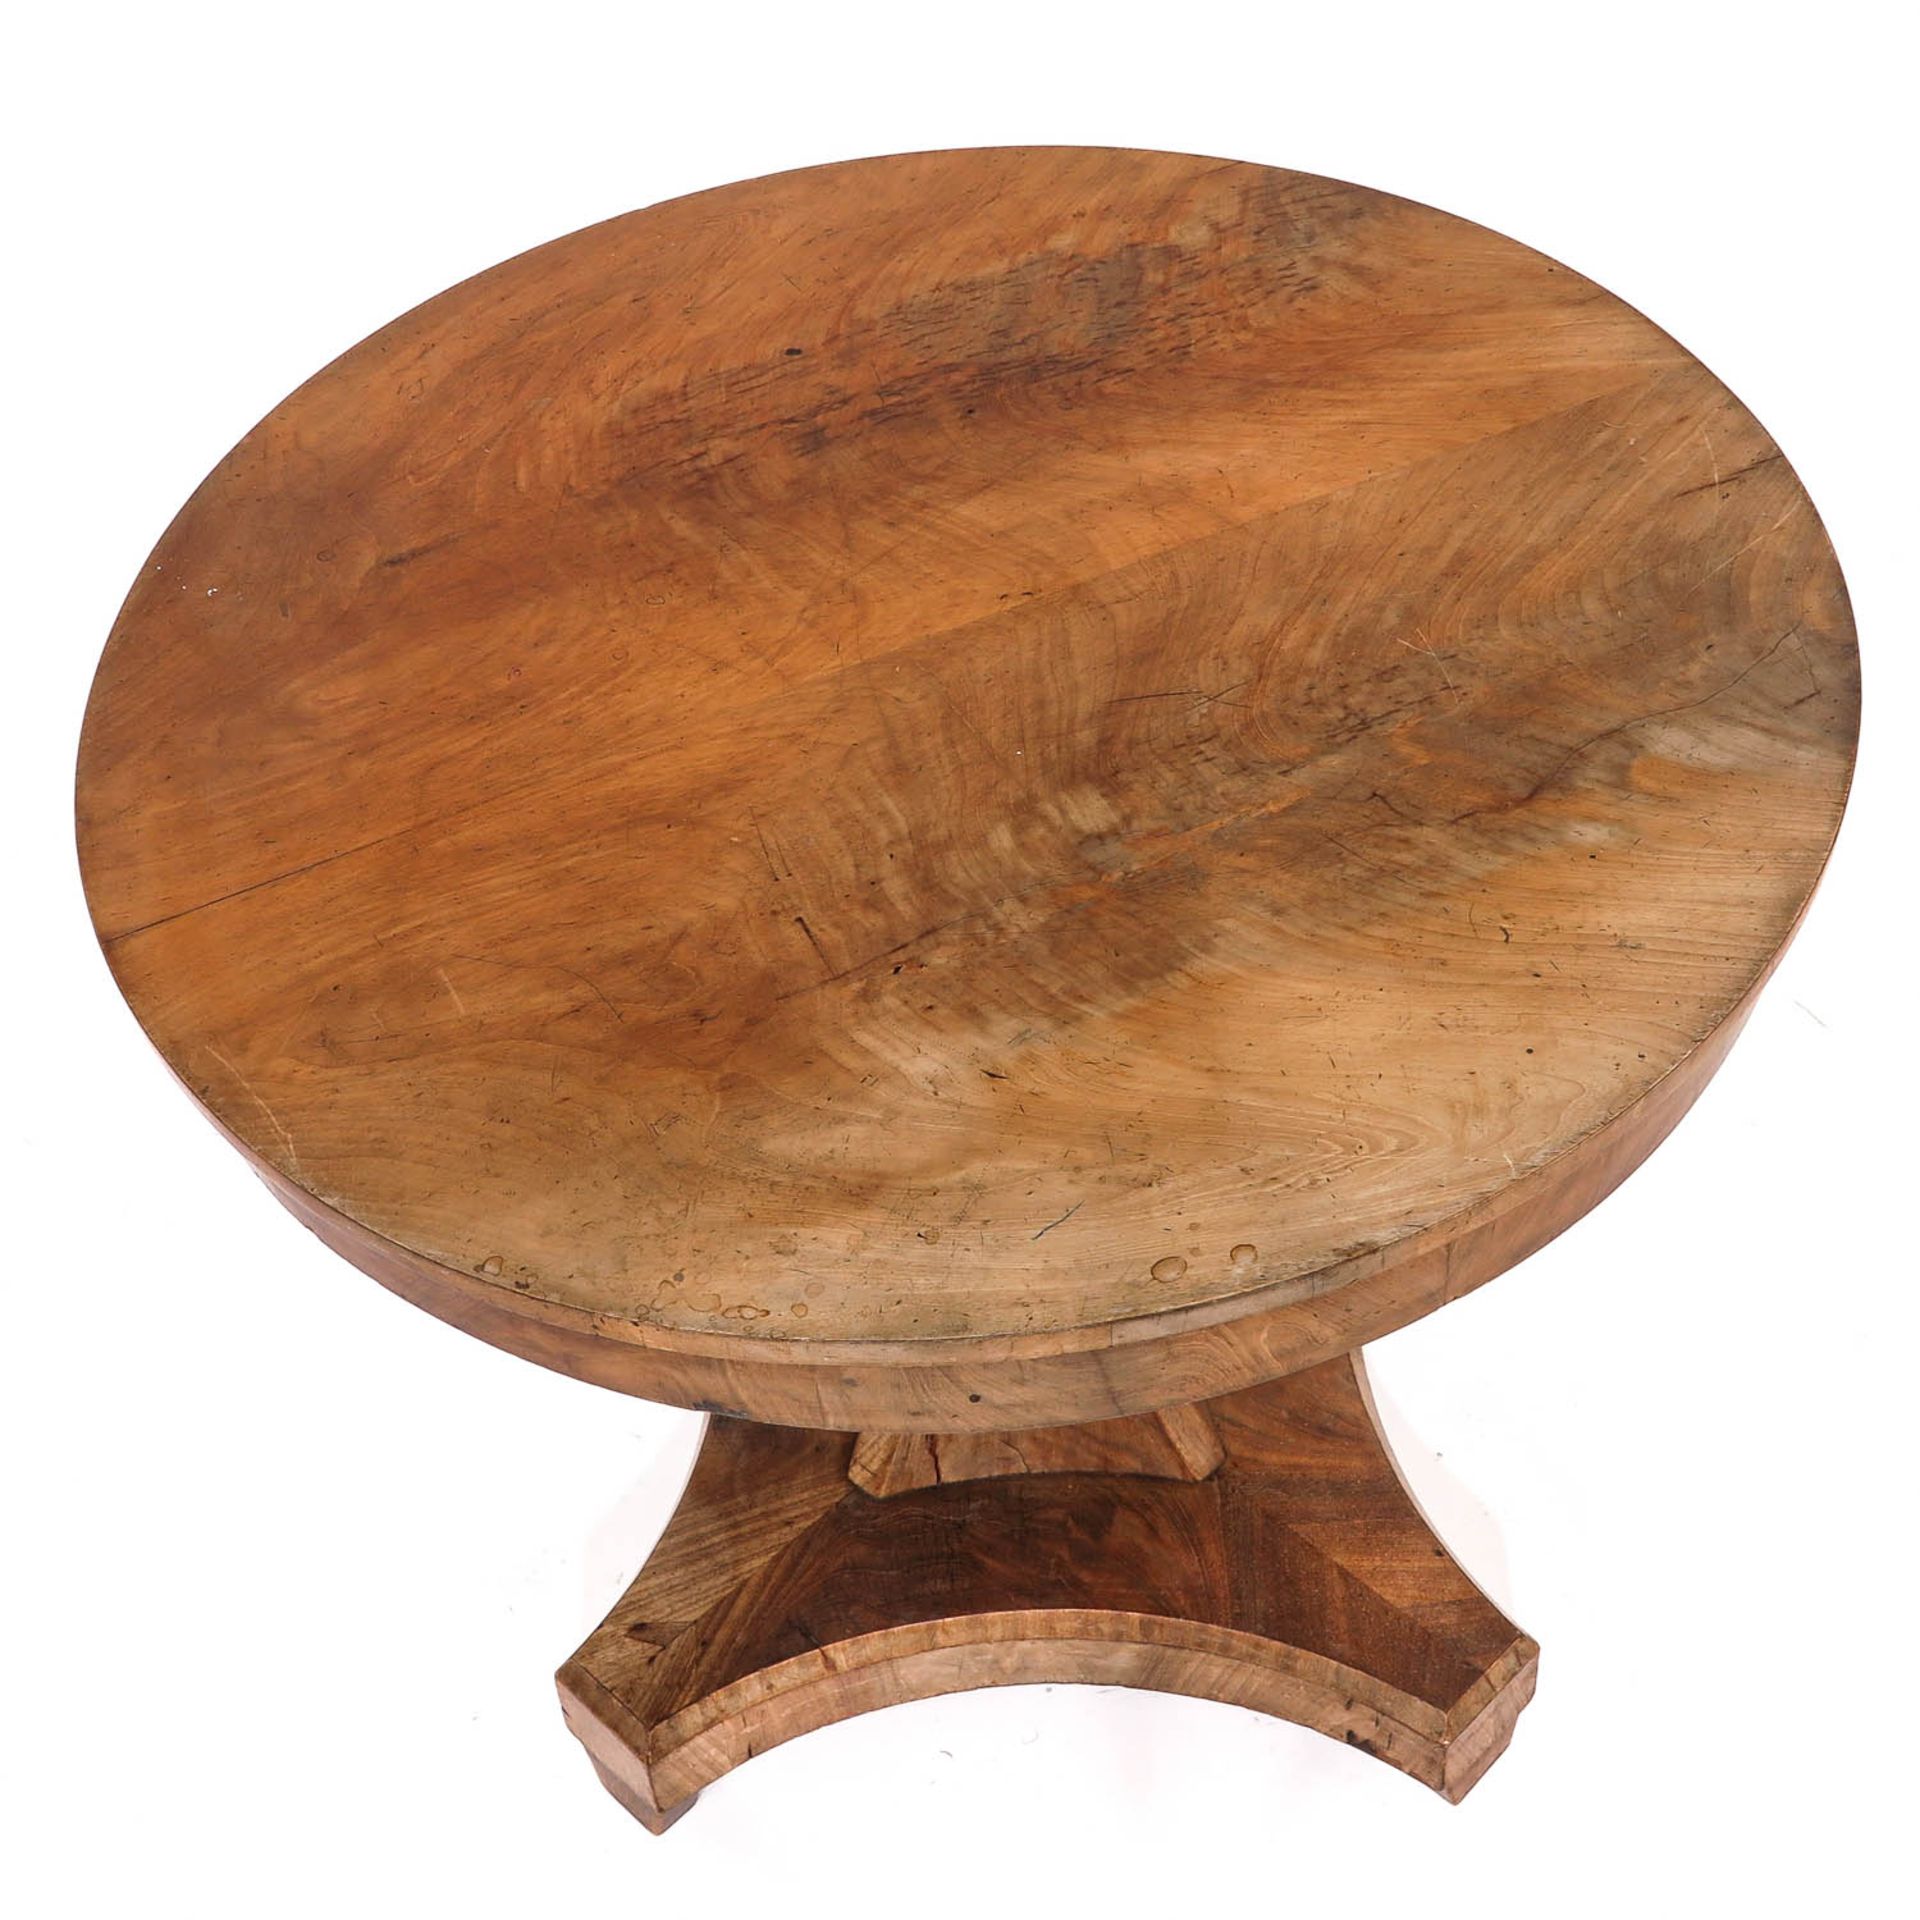 A 19th Century Walnut Veneer Table - Image 4 of 7